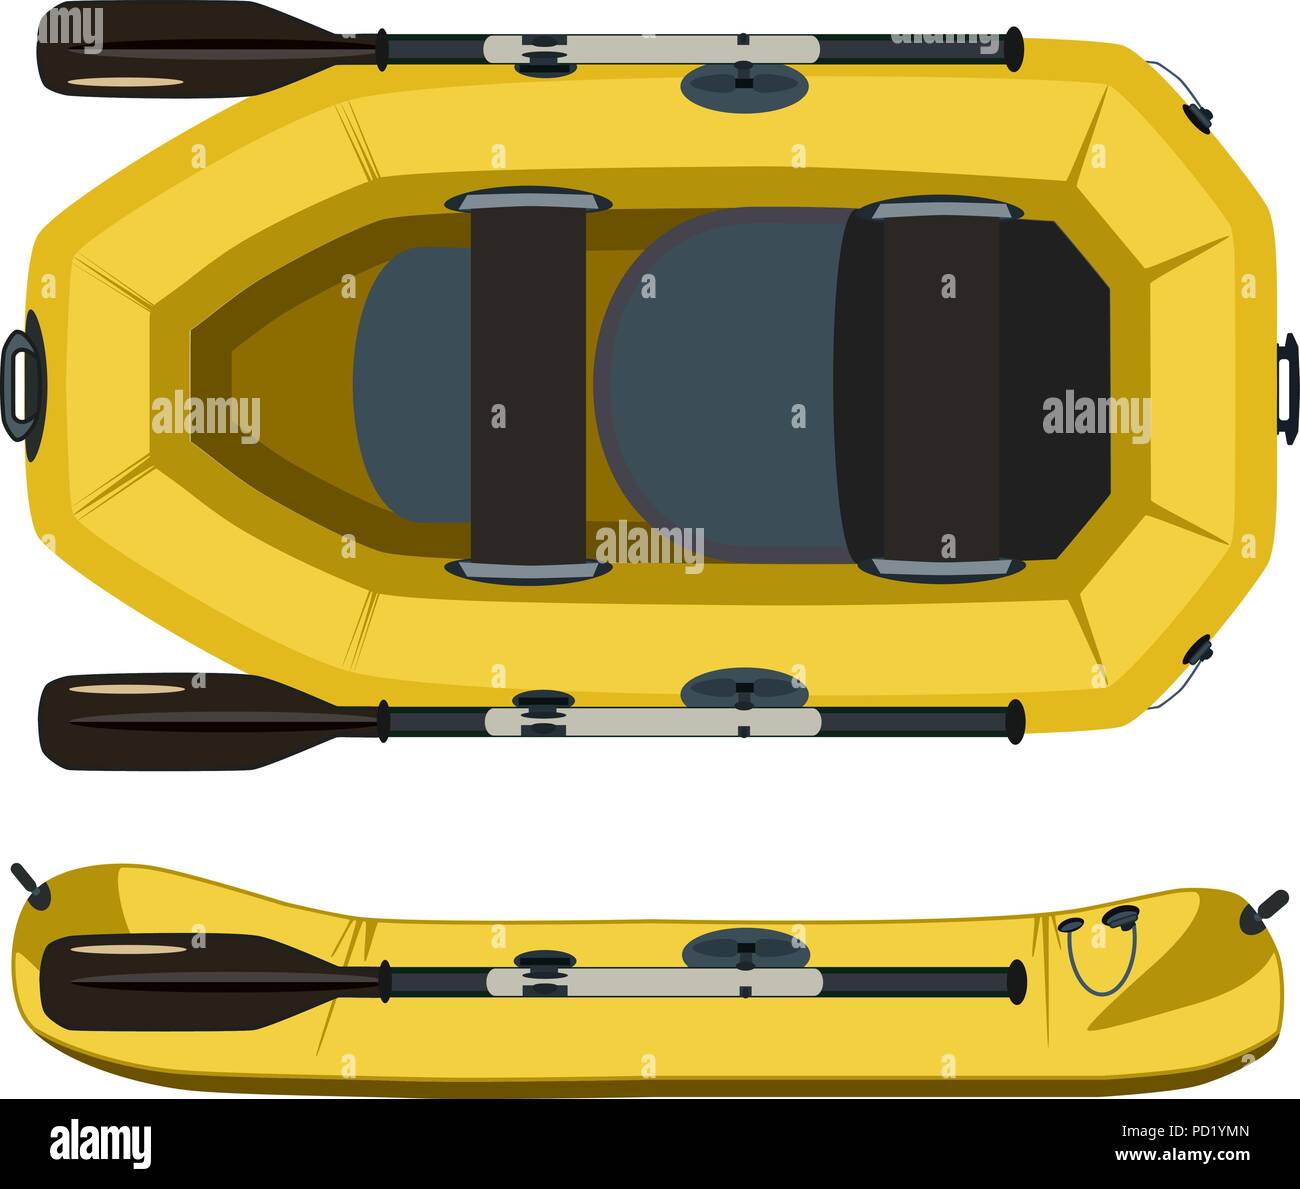 Rafting boot Vektor flachbild Abbildung Stock Vektor